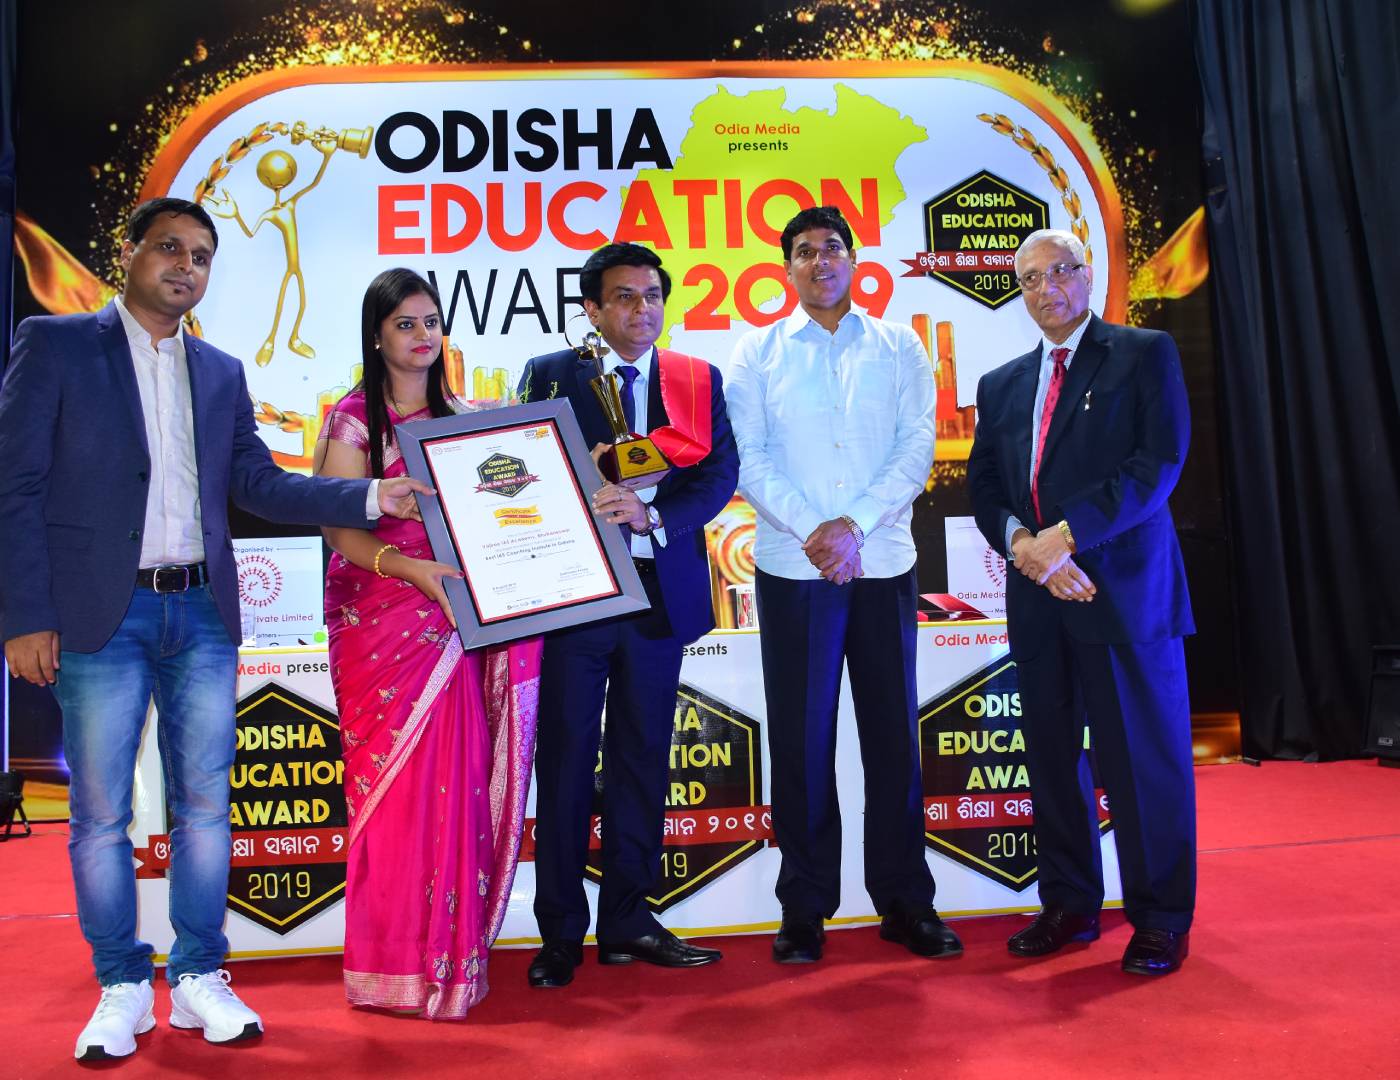 Odisha Education Award